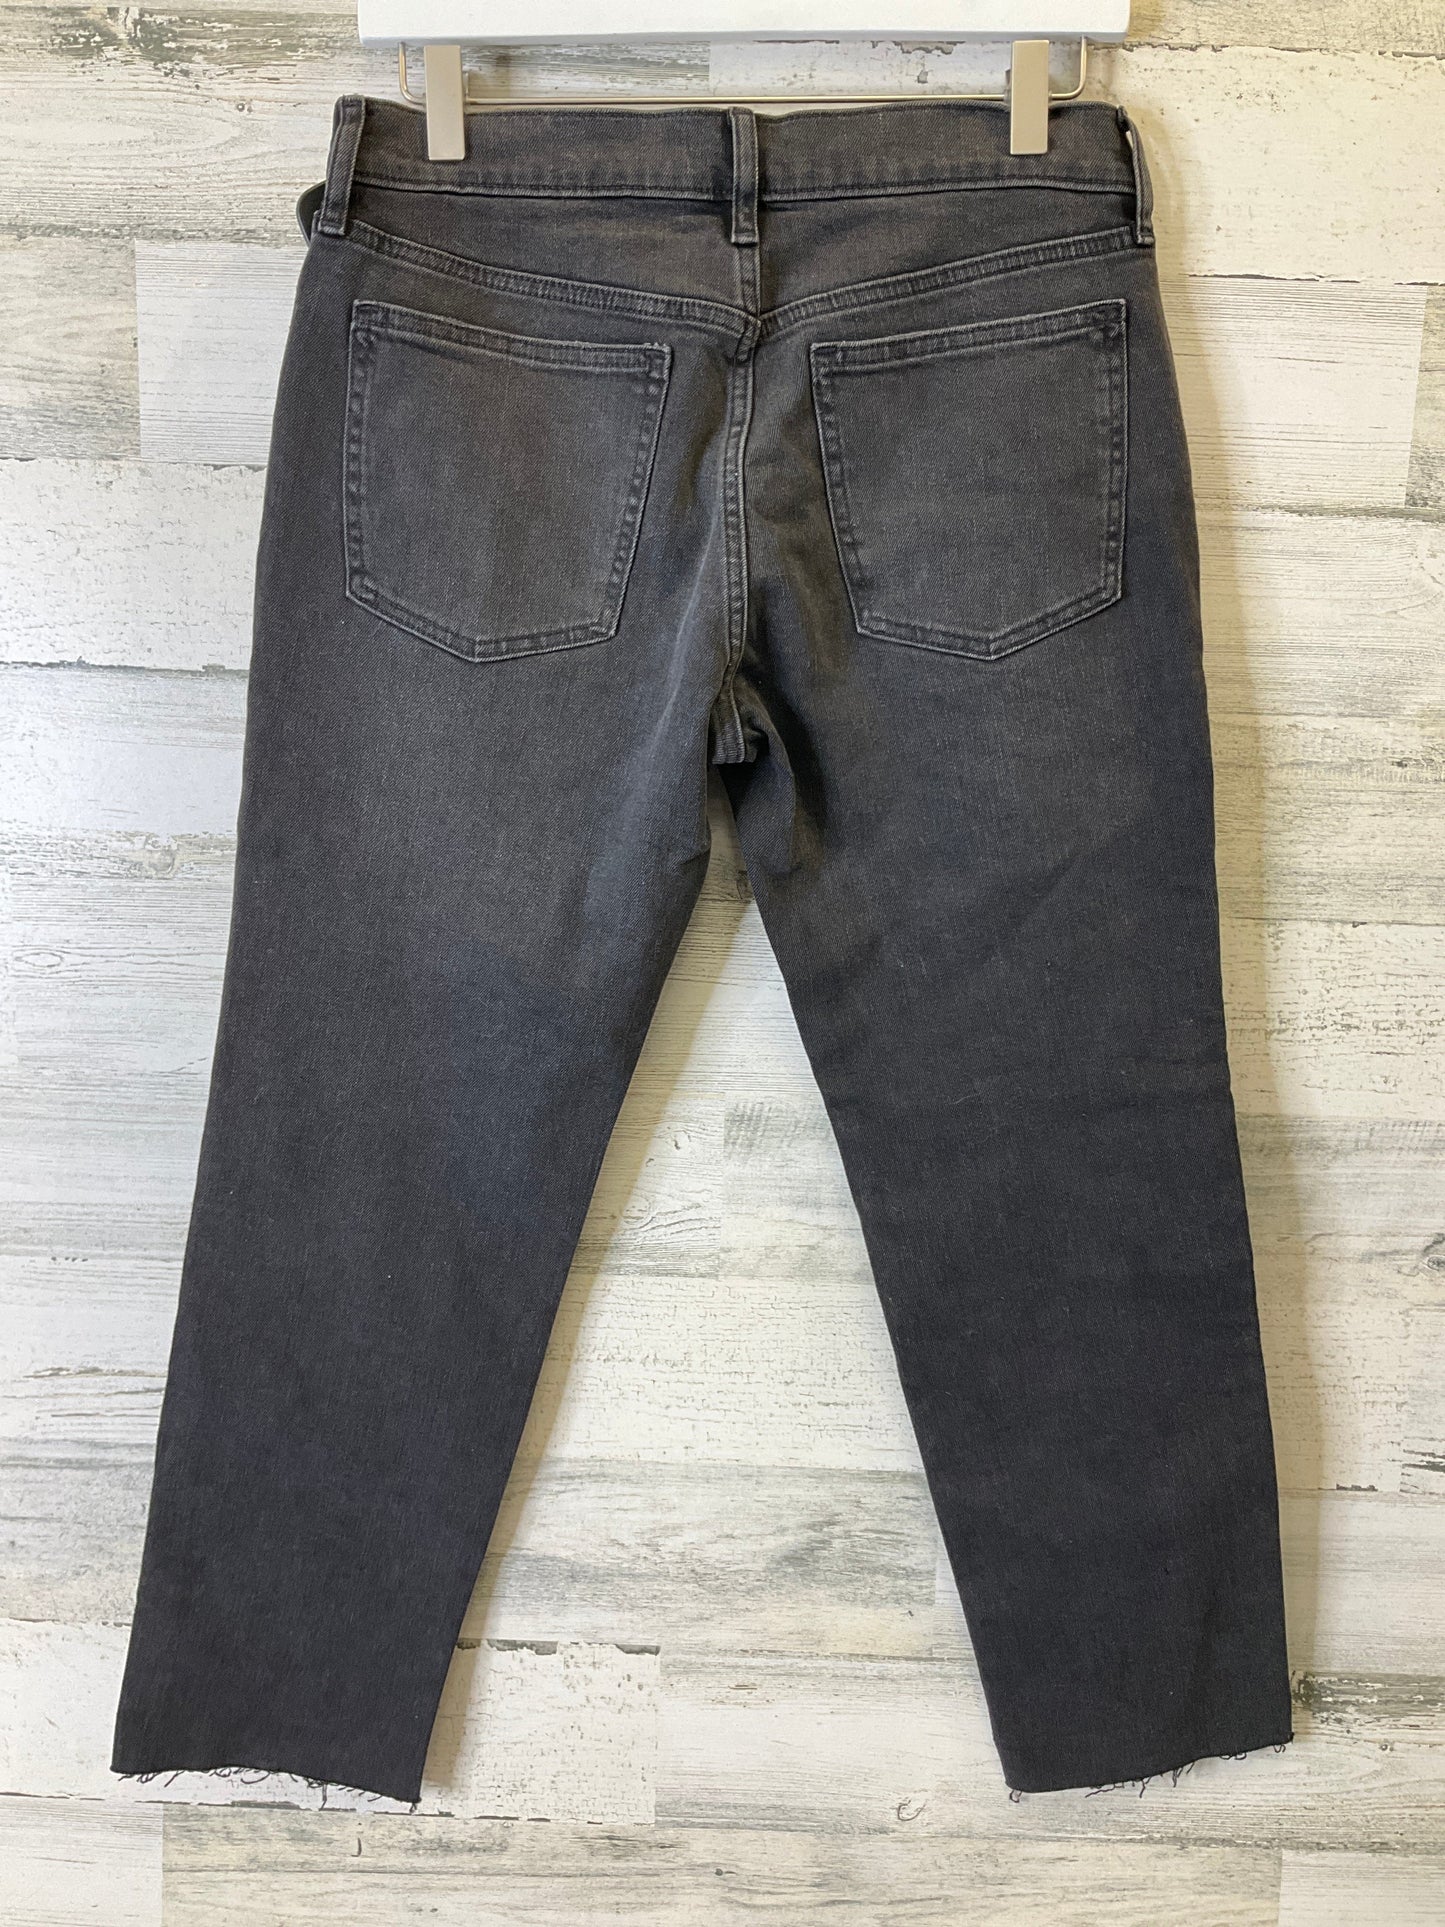 Black Jeans Cropped Gap, Size 4petite